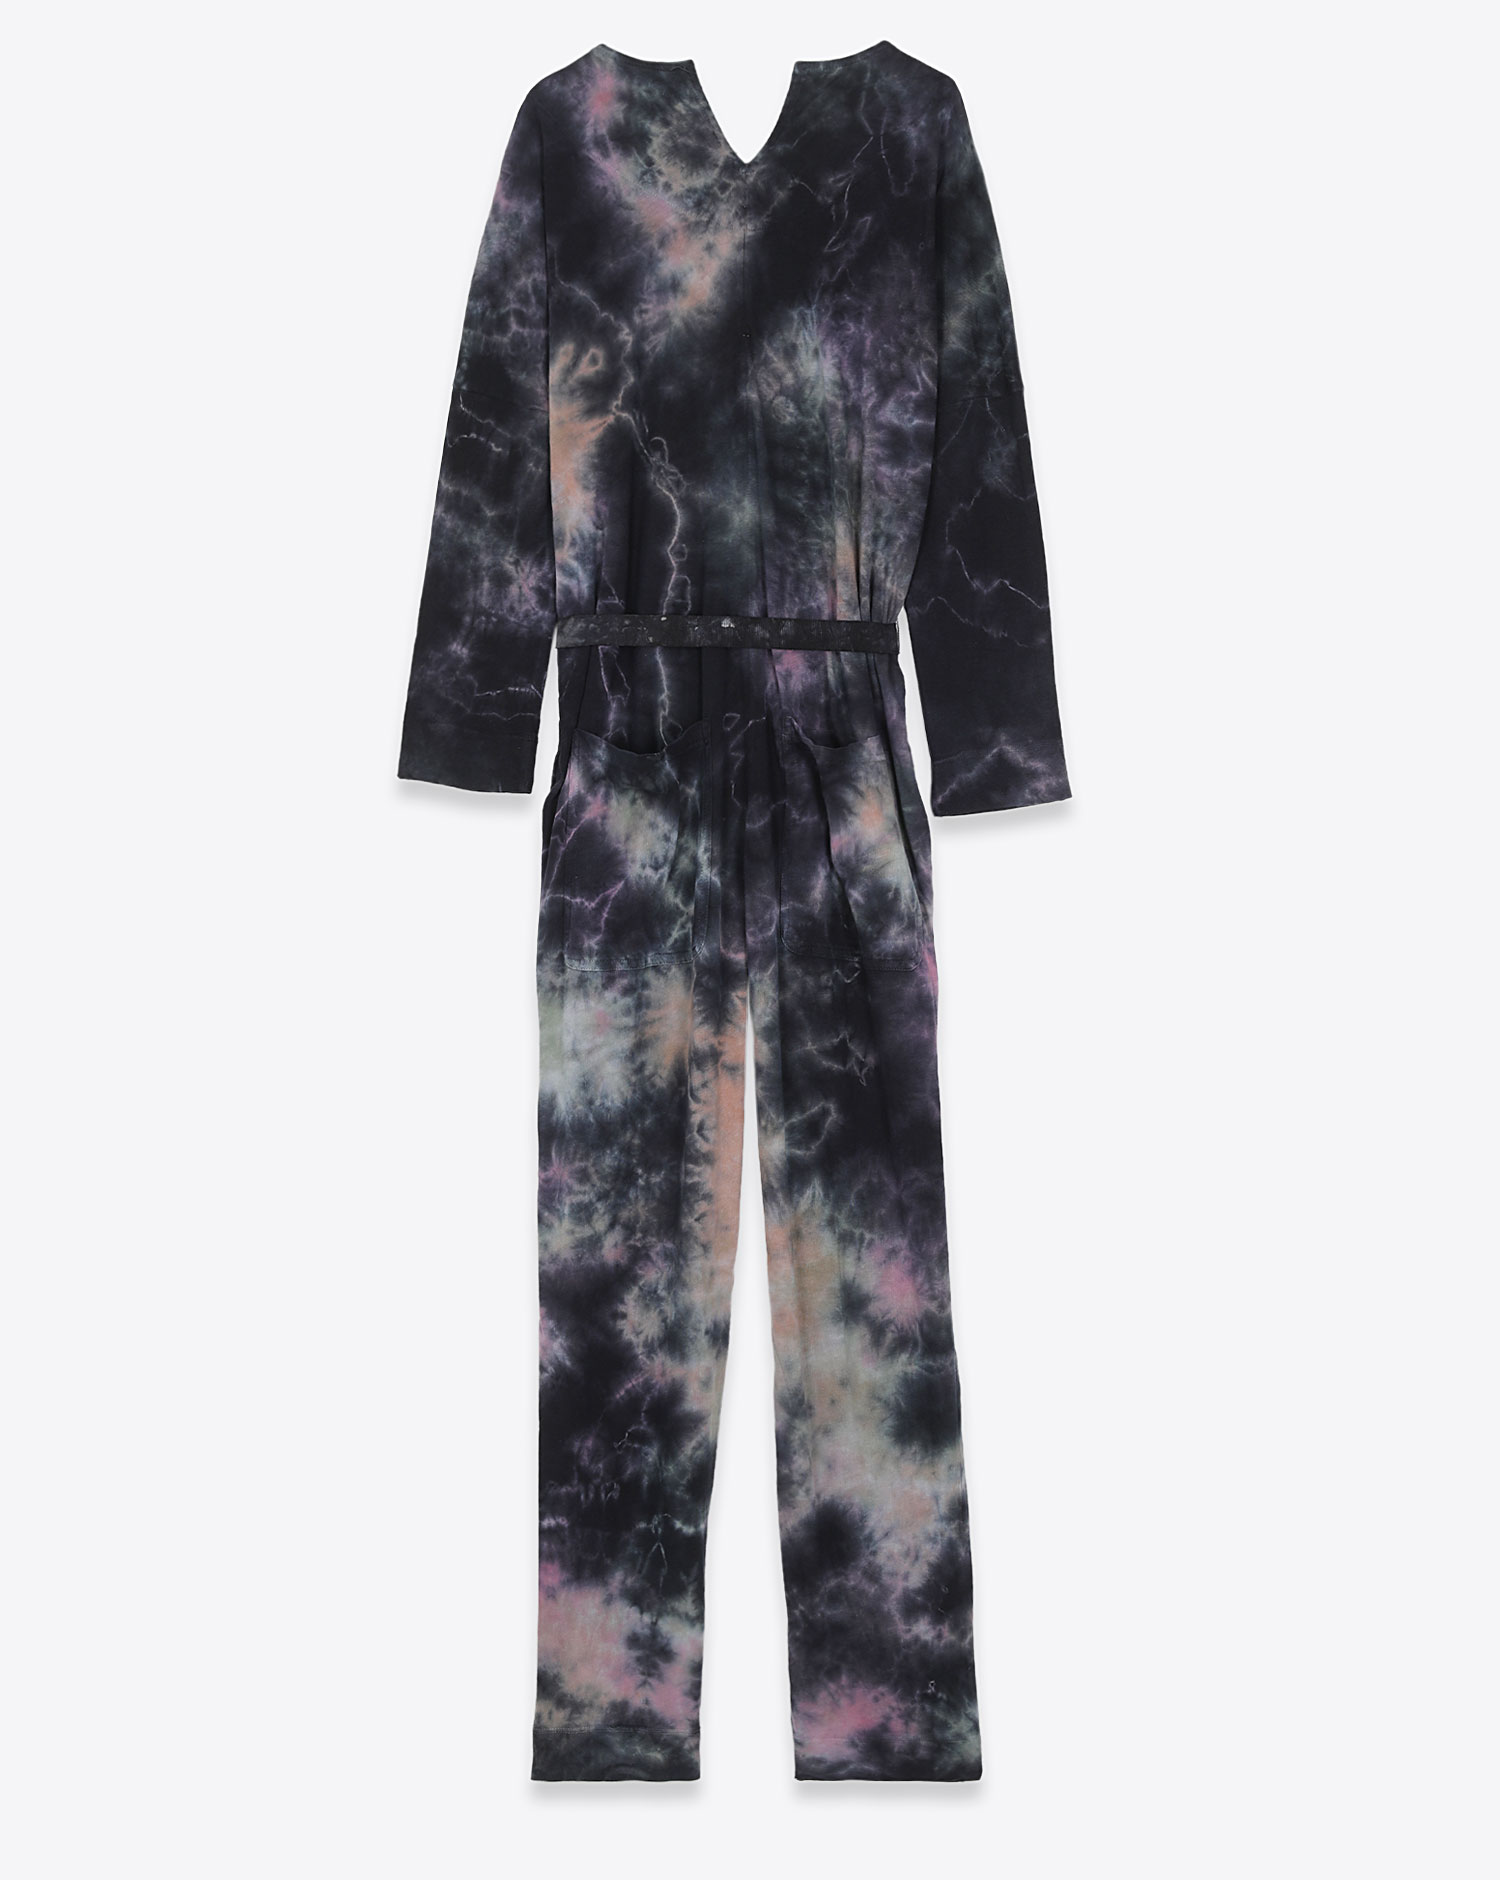 Combinaison Flight Suit Nebula Raquel Allegra Tie and Dye.